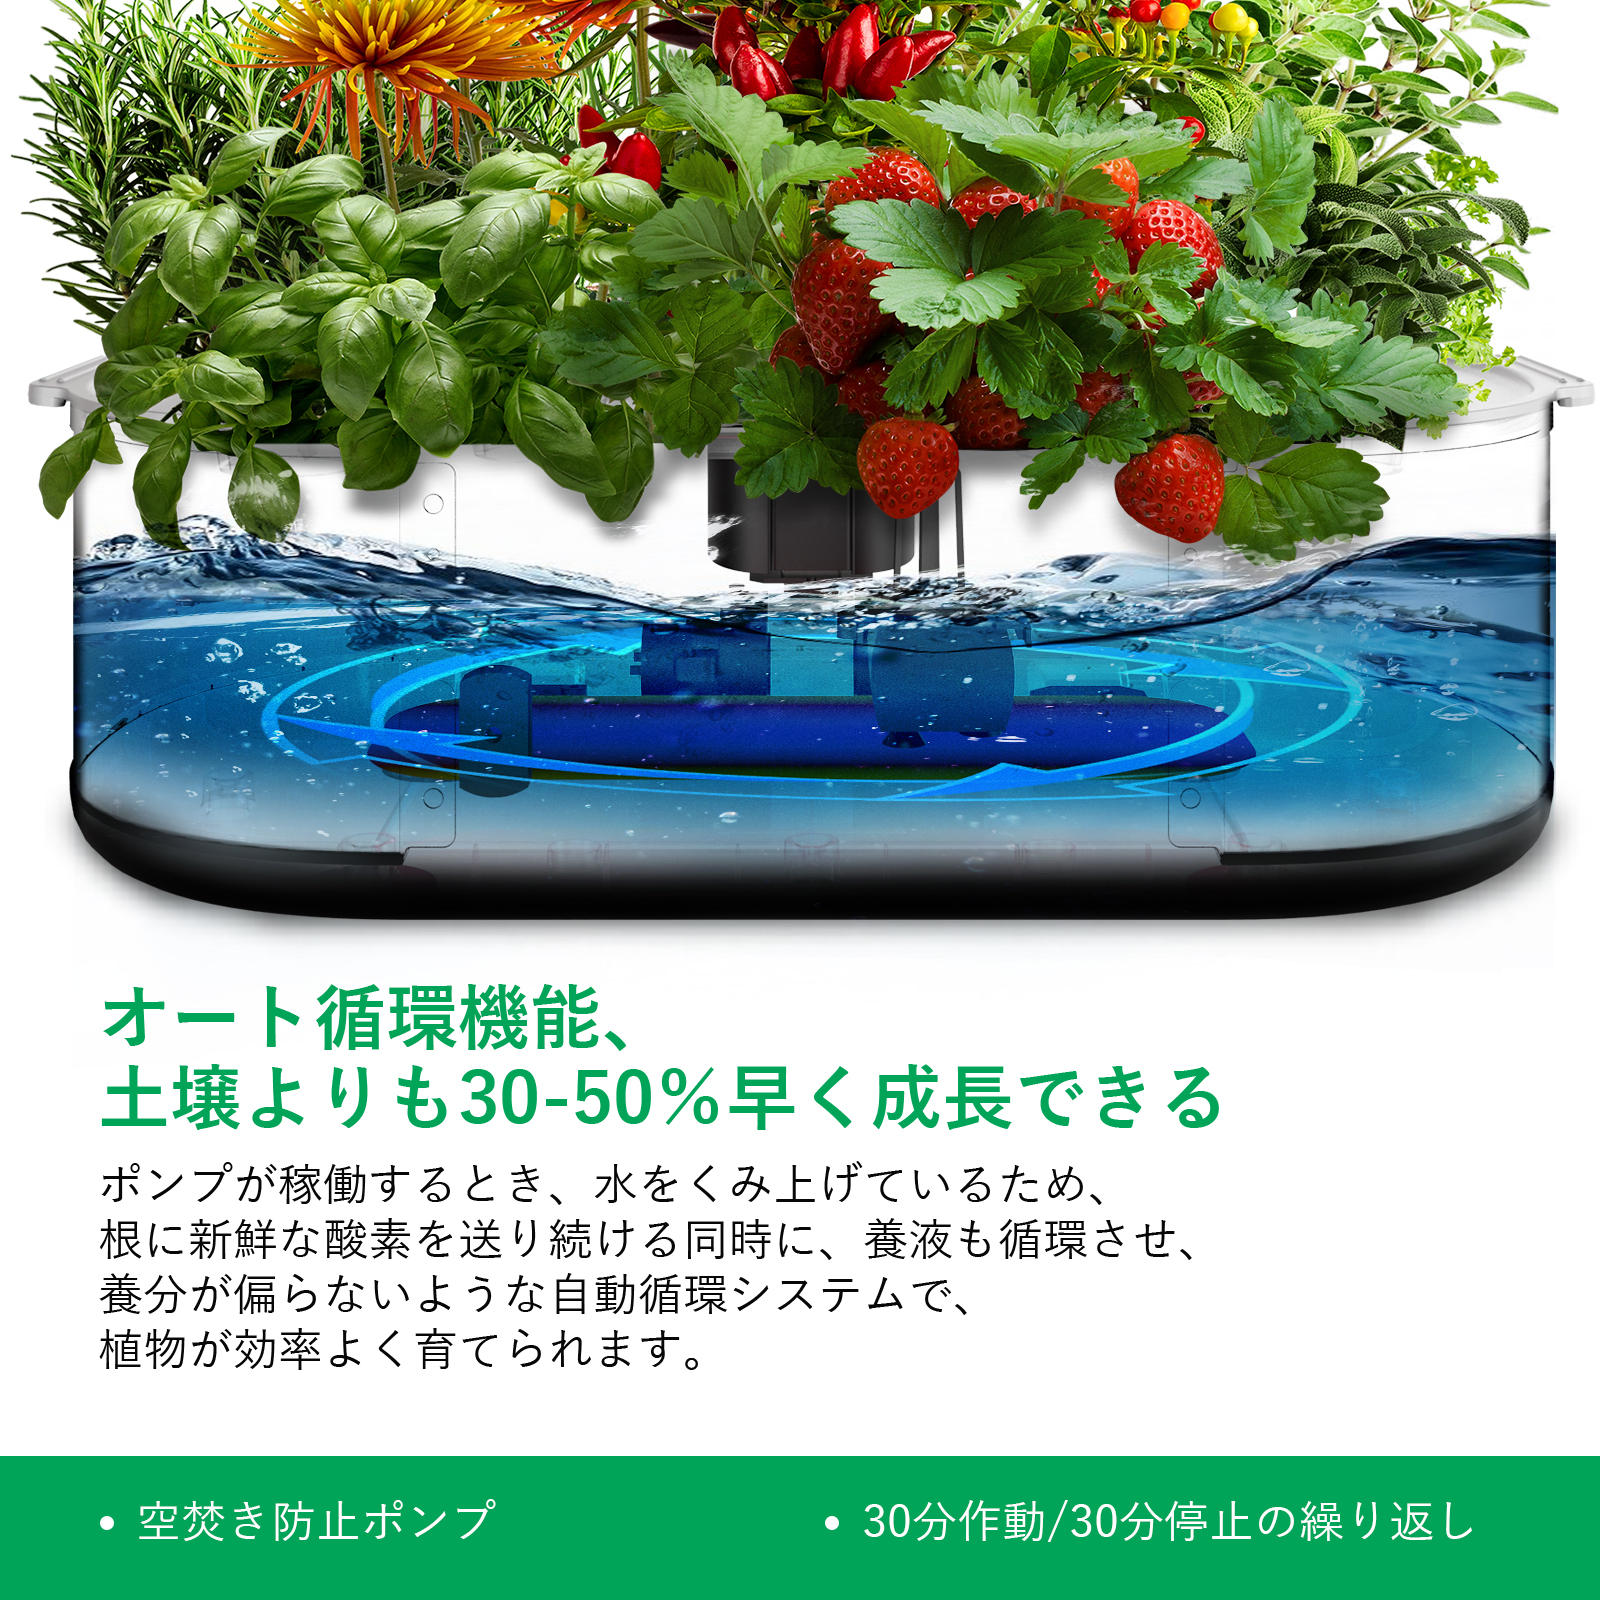 GS1 Ｍini】 JustSmart 水耕栽培キット 白 液晶パネル タイマー 循環式ポンプ 家庭菜園 プランター JustSmart